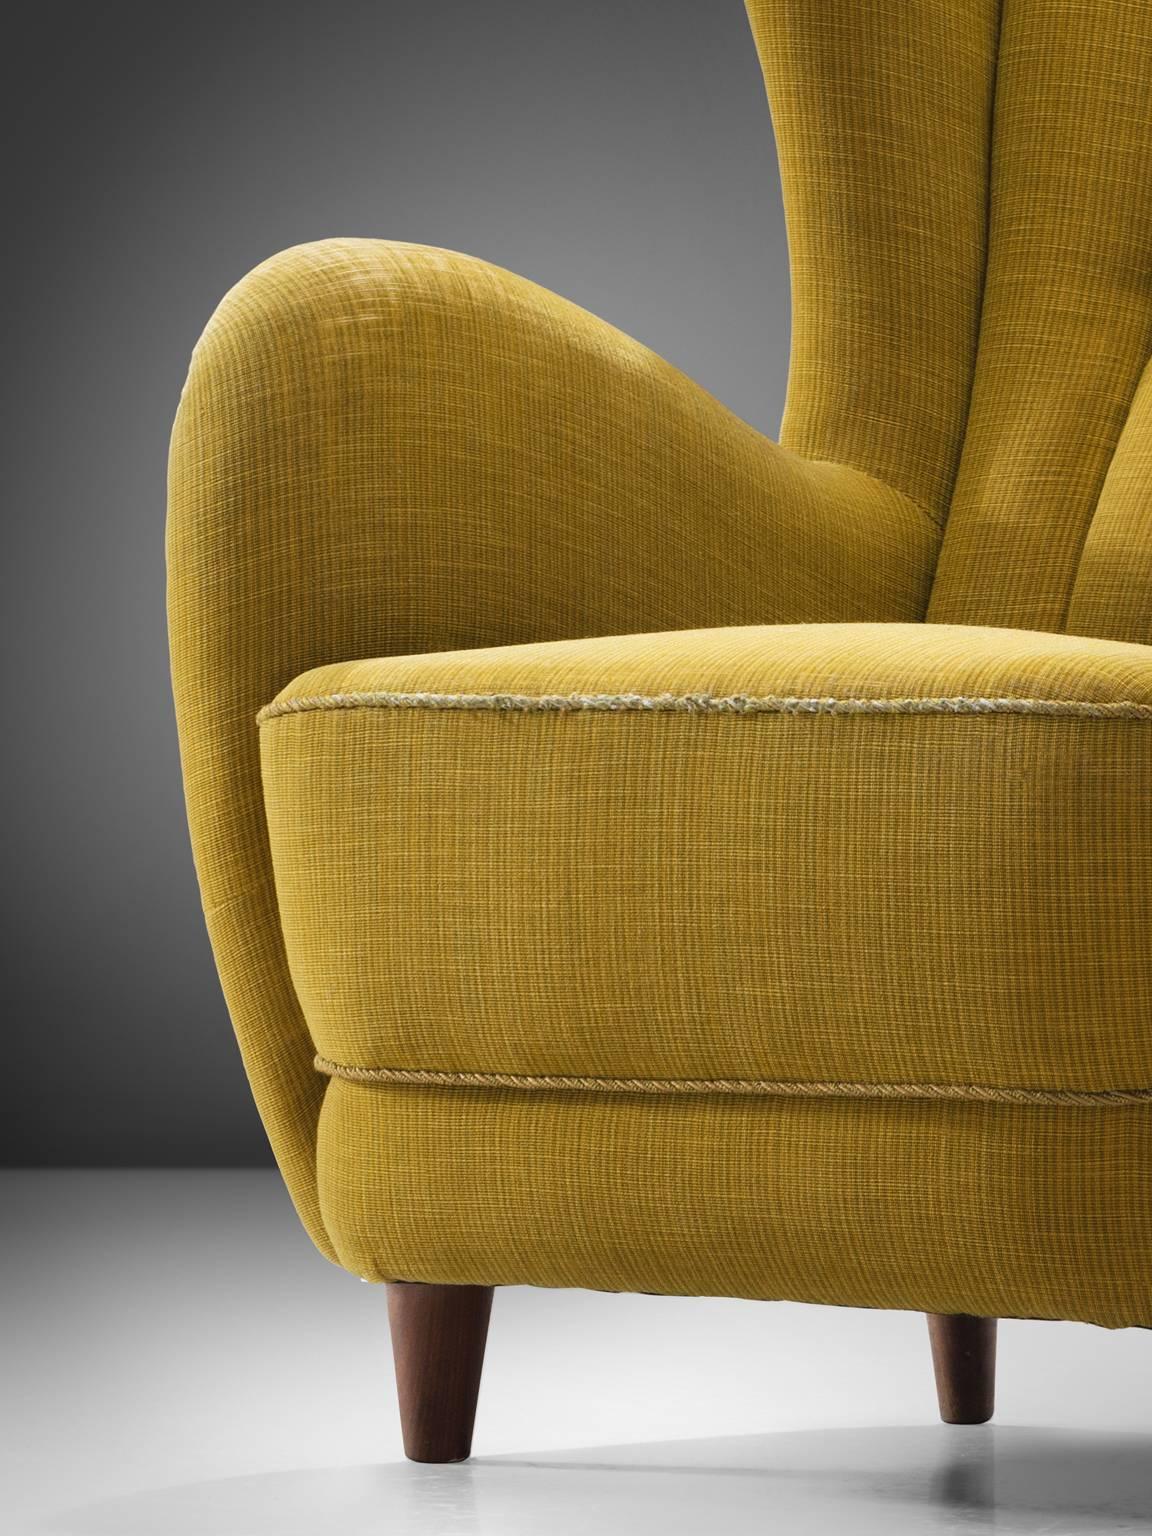 Mid-20th Century Danish Wingback Chair in Original Yellow Upholstery